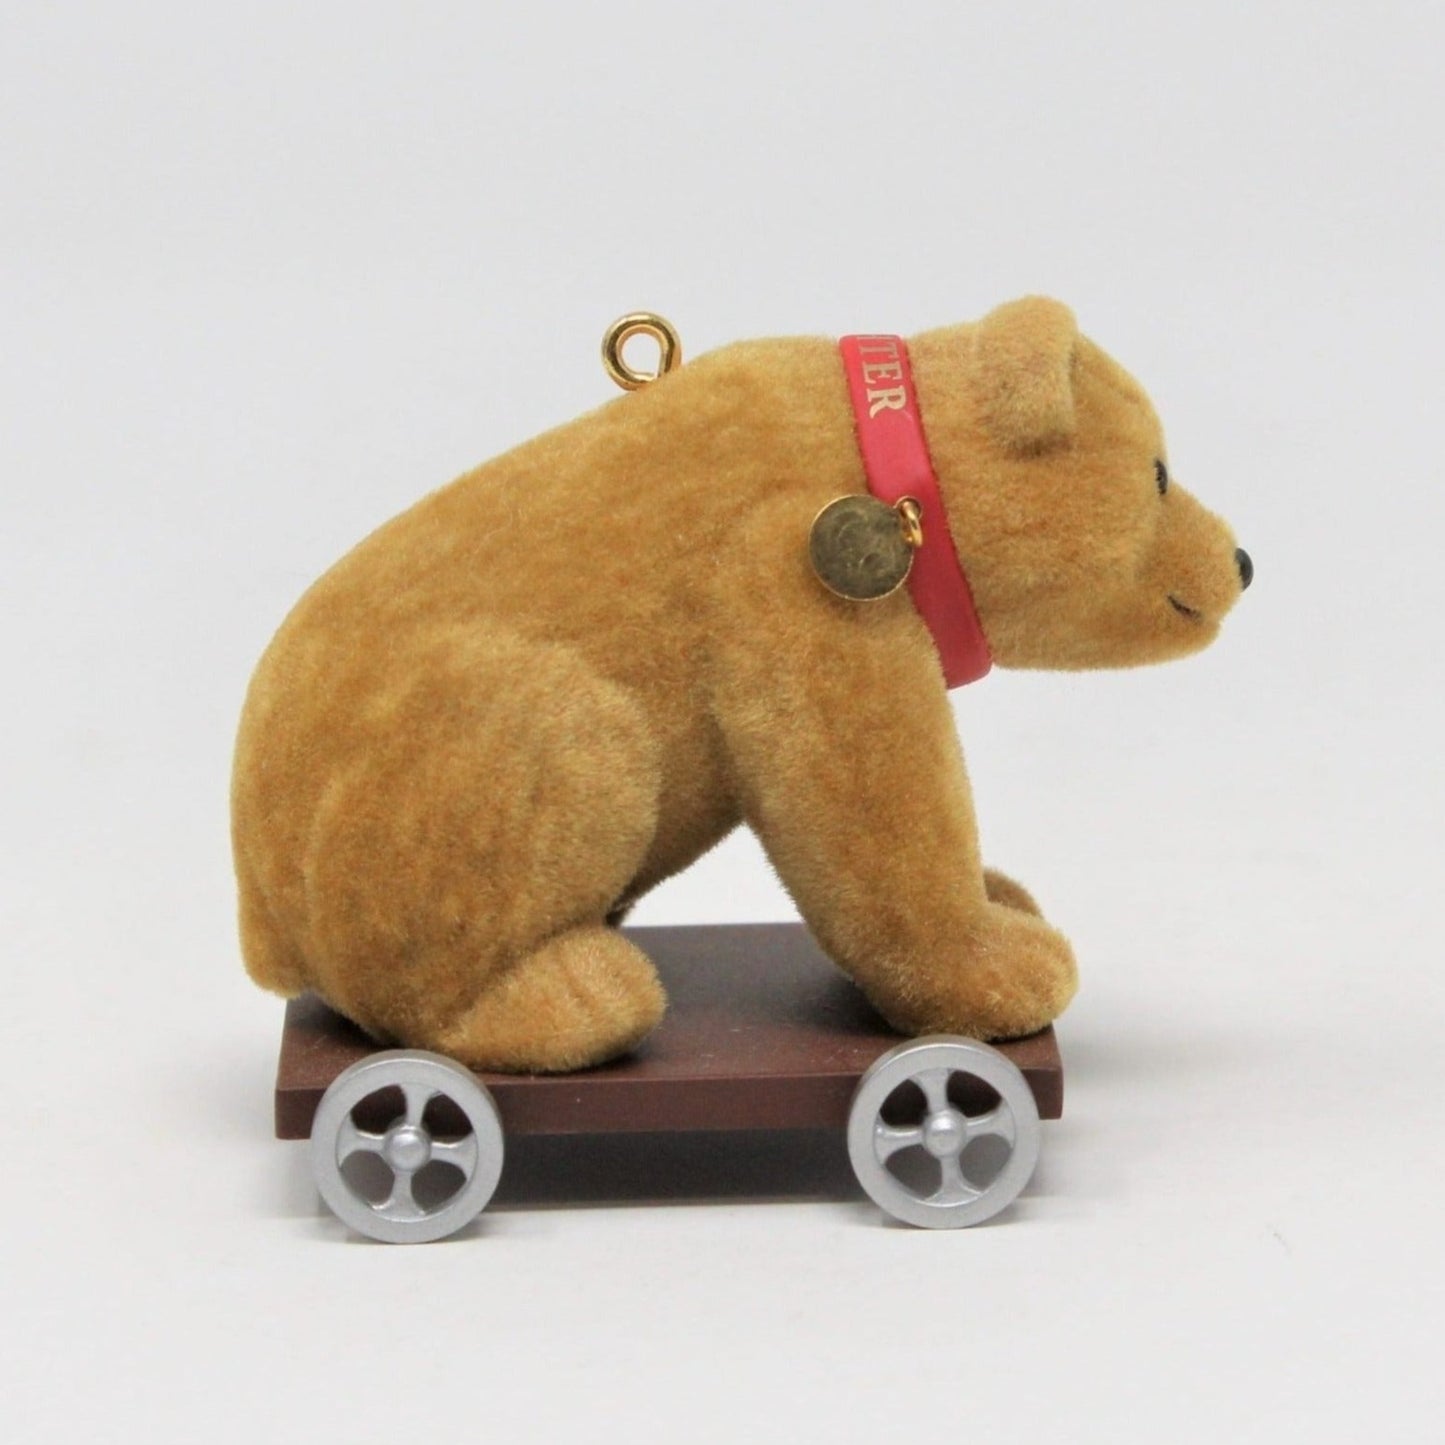 Ornament, Hallmark, Daughter, Bear Pull Toy, 1999